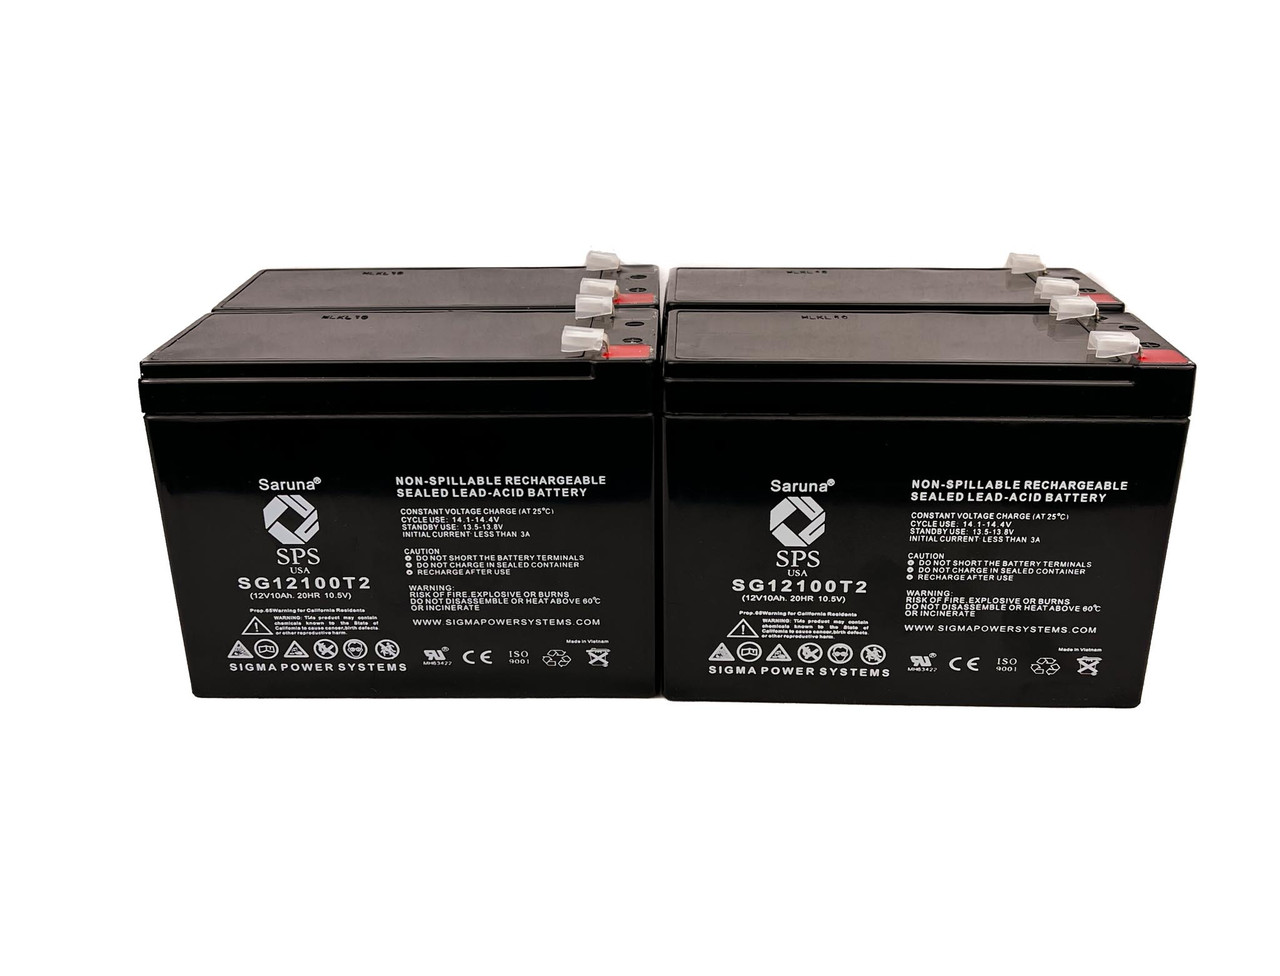 Raion Power 12V 10Ah Lead Acid Replacement Battery for Diamec DM12-10V - 4 Pack